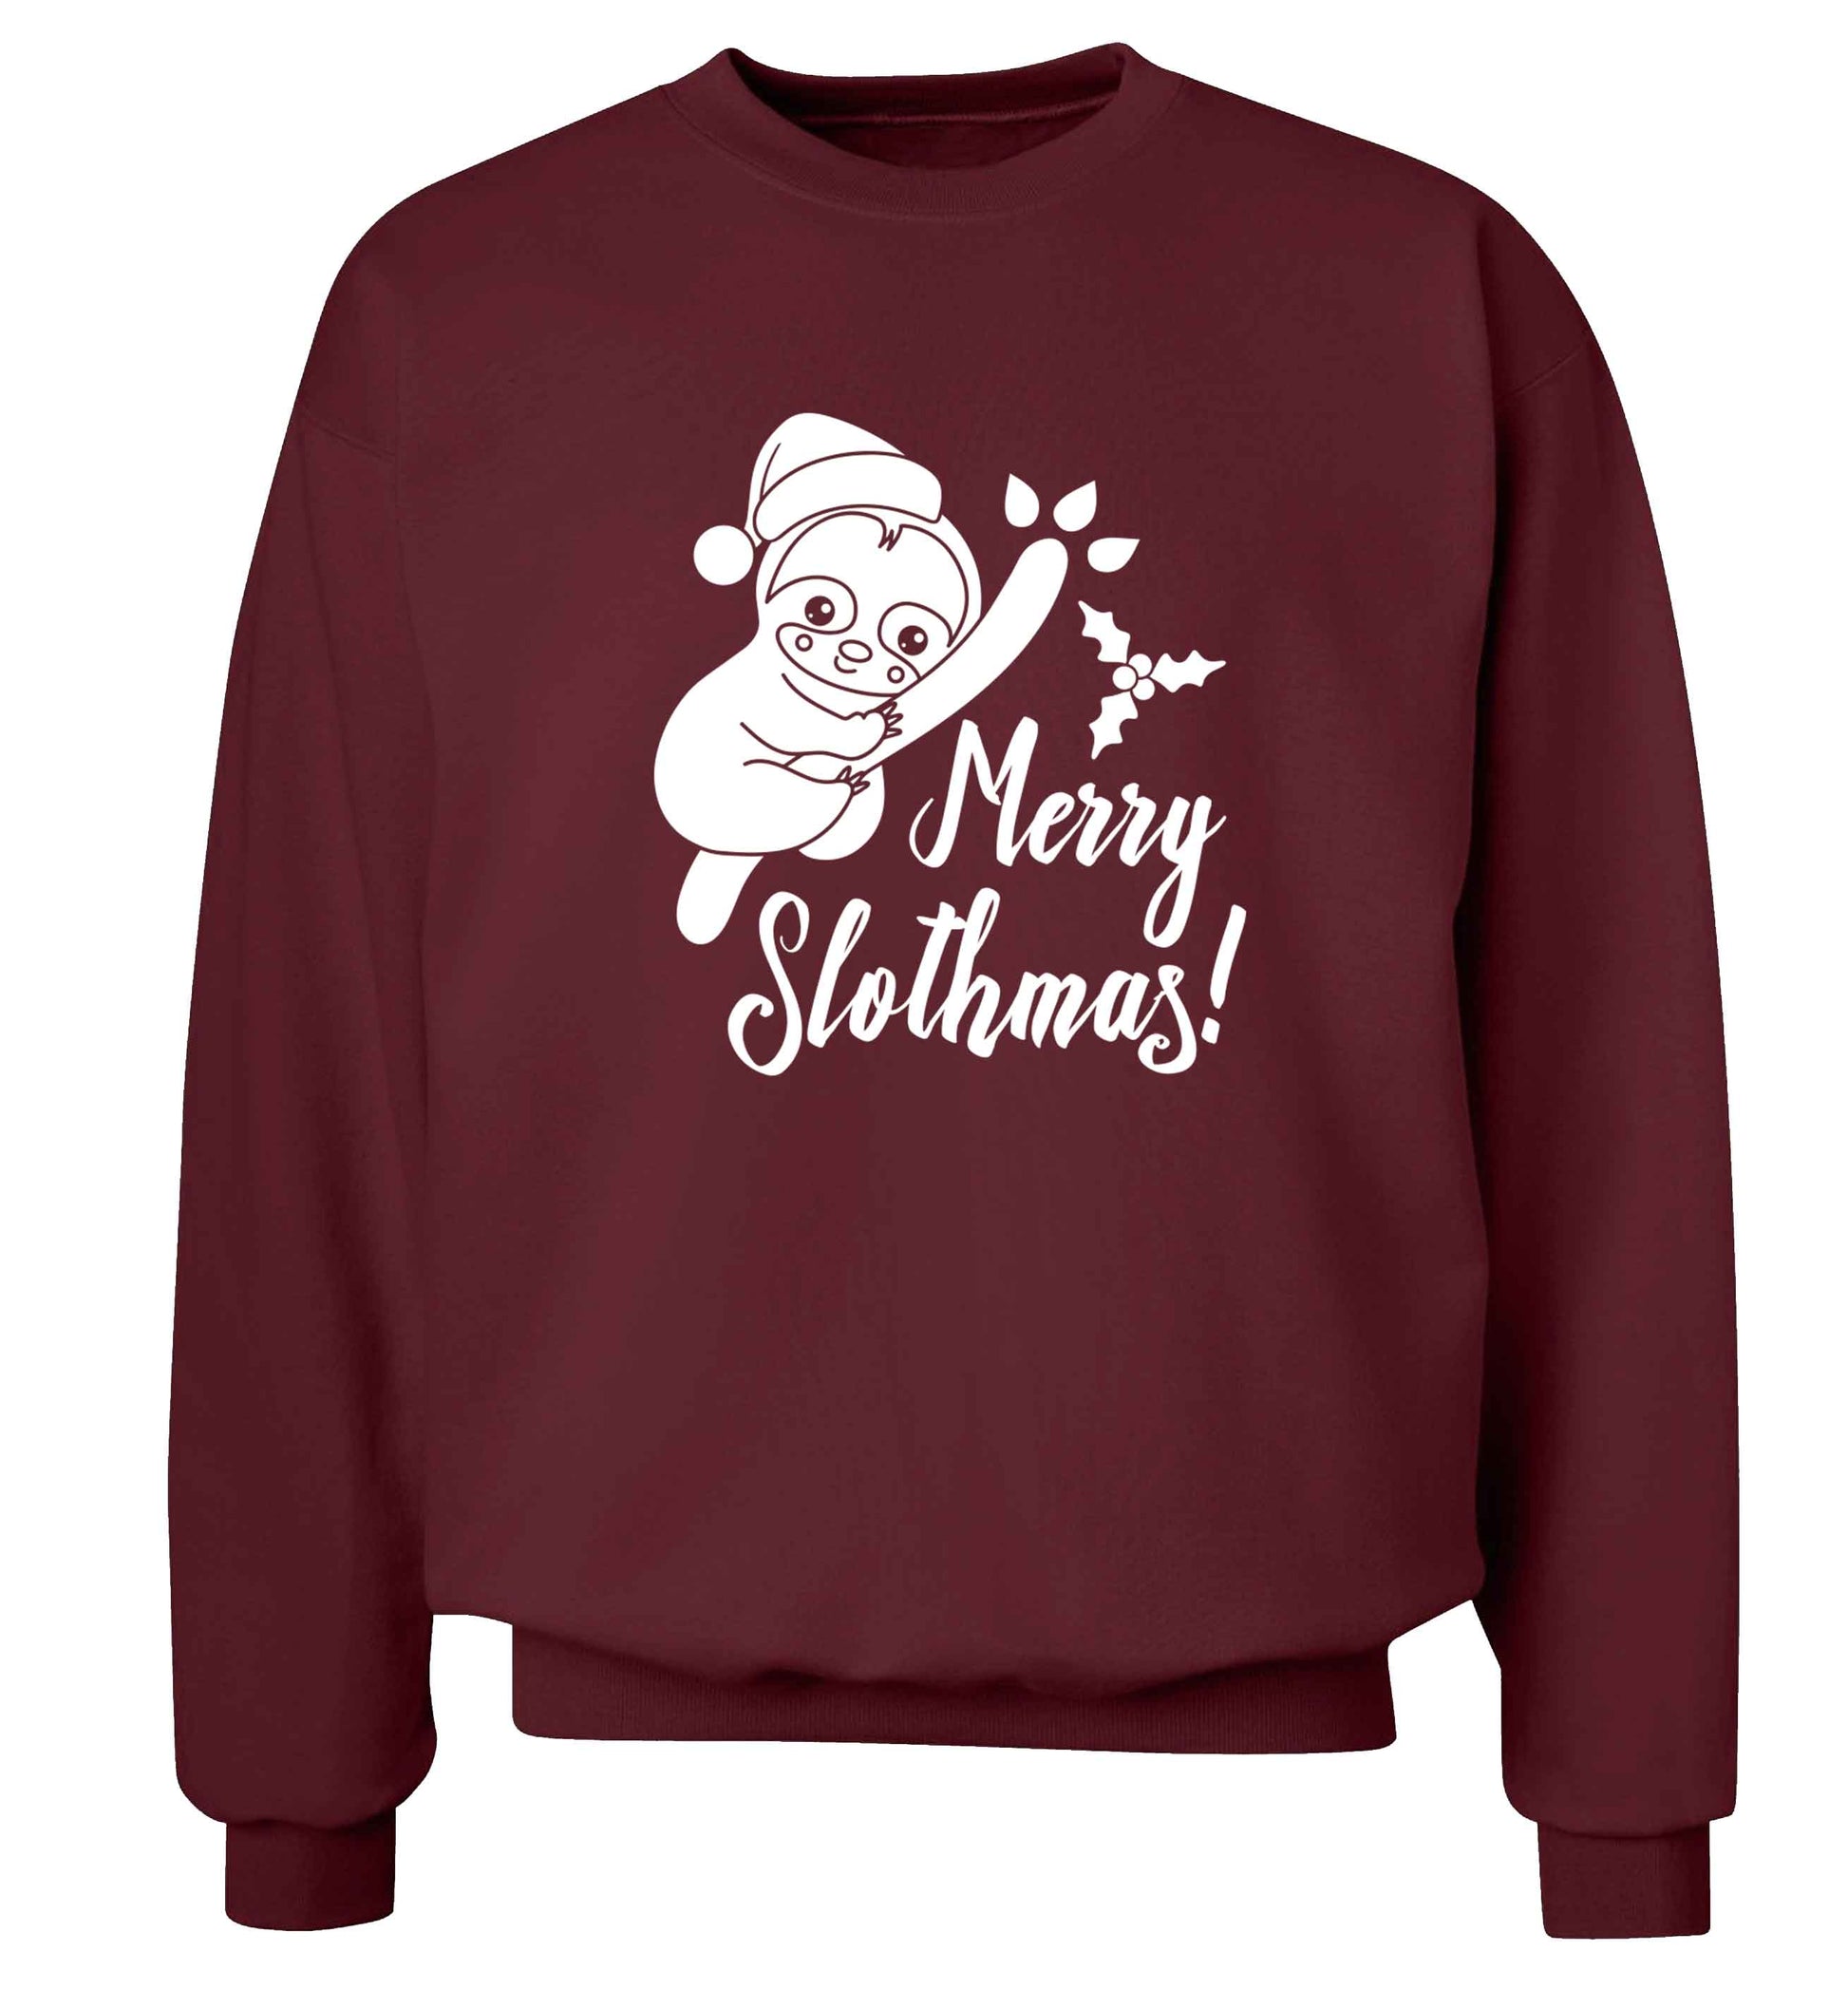 Merry Slothmas adult's unisex maroon sweater 2XL